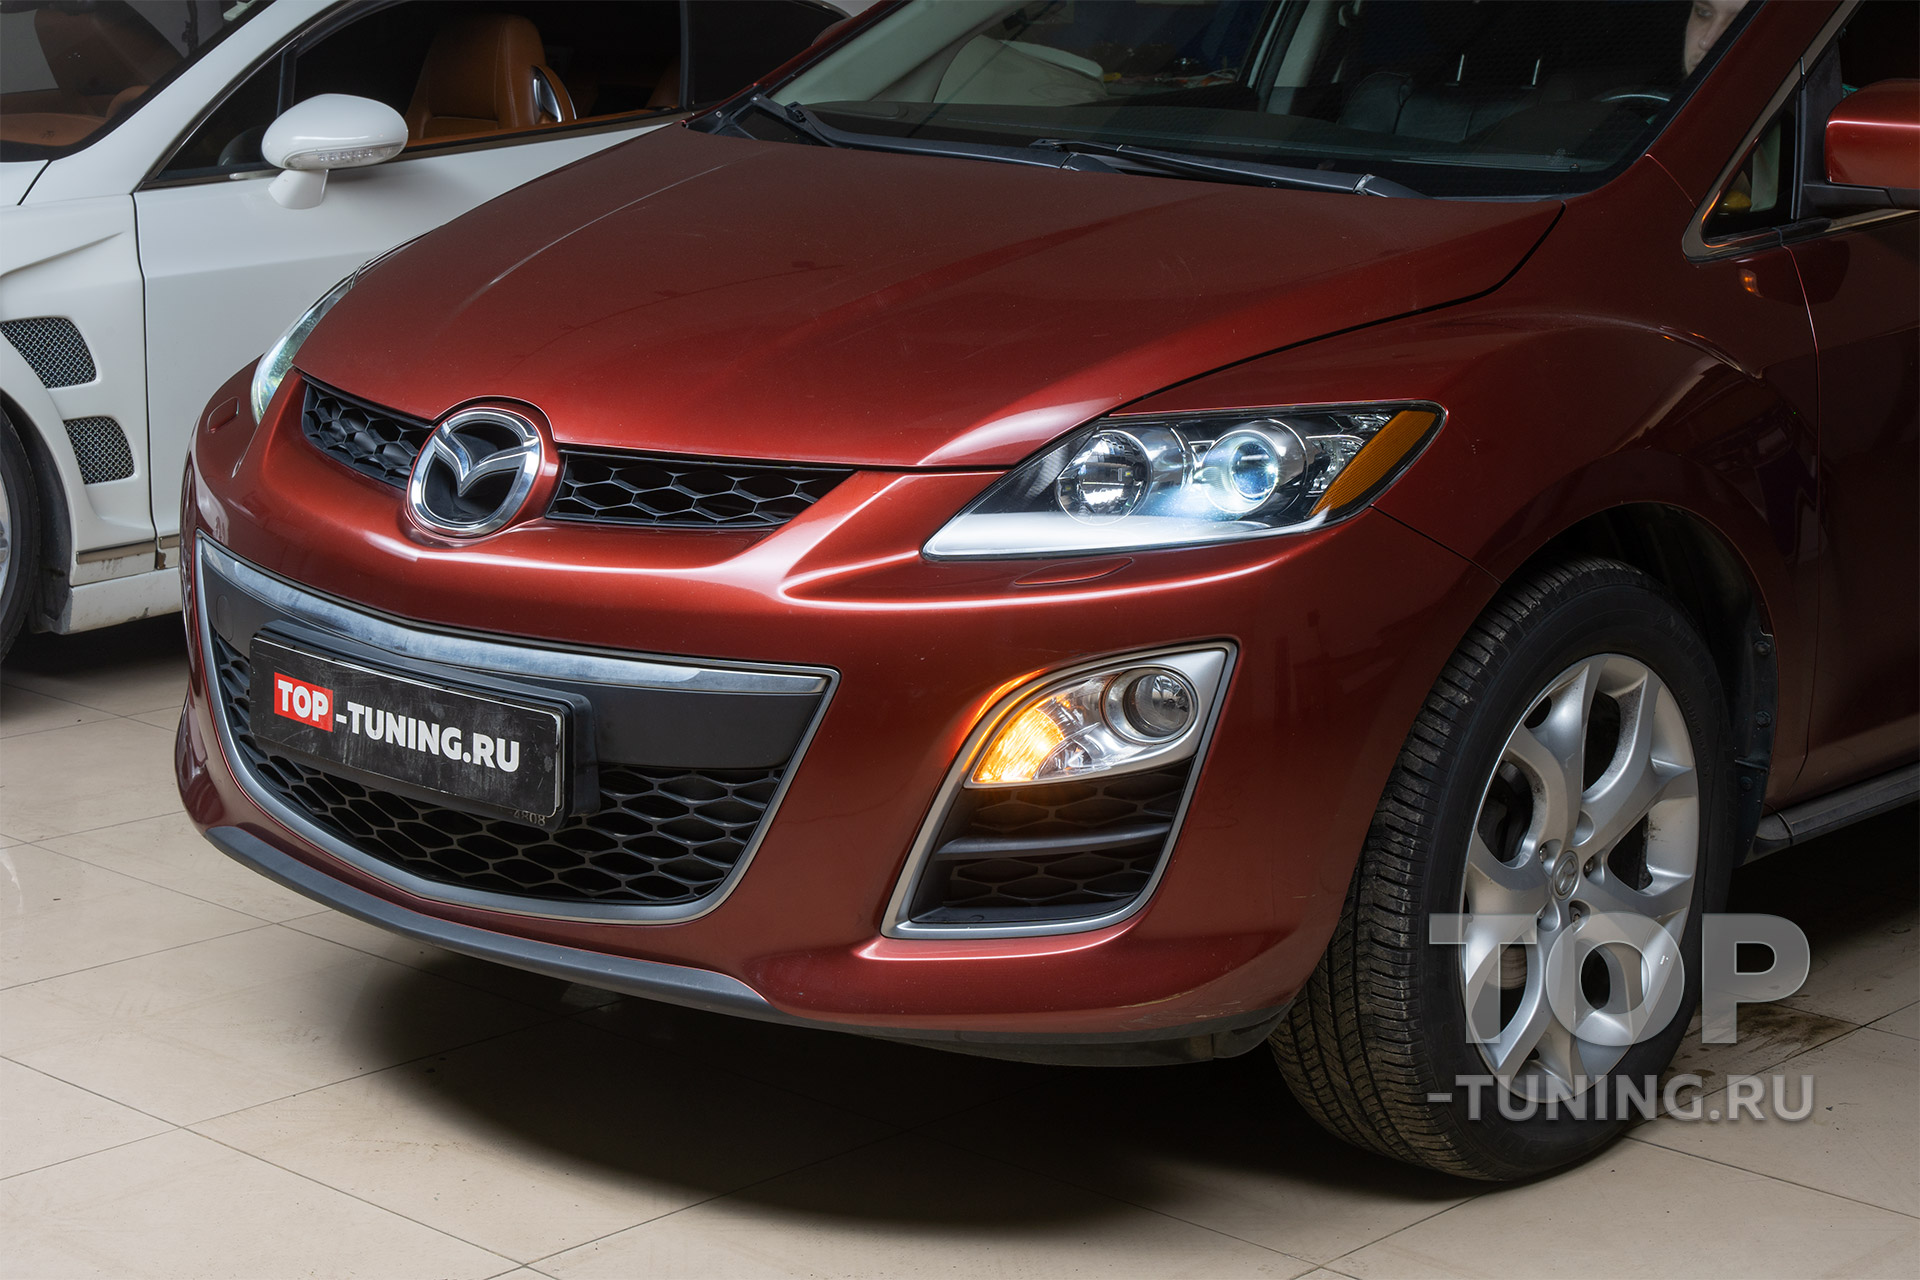 Ремонт и тюнинг оптики Mazda CX-7 2010 – линзы Bi LED Progressive